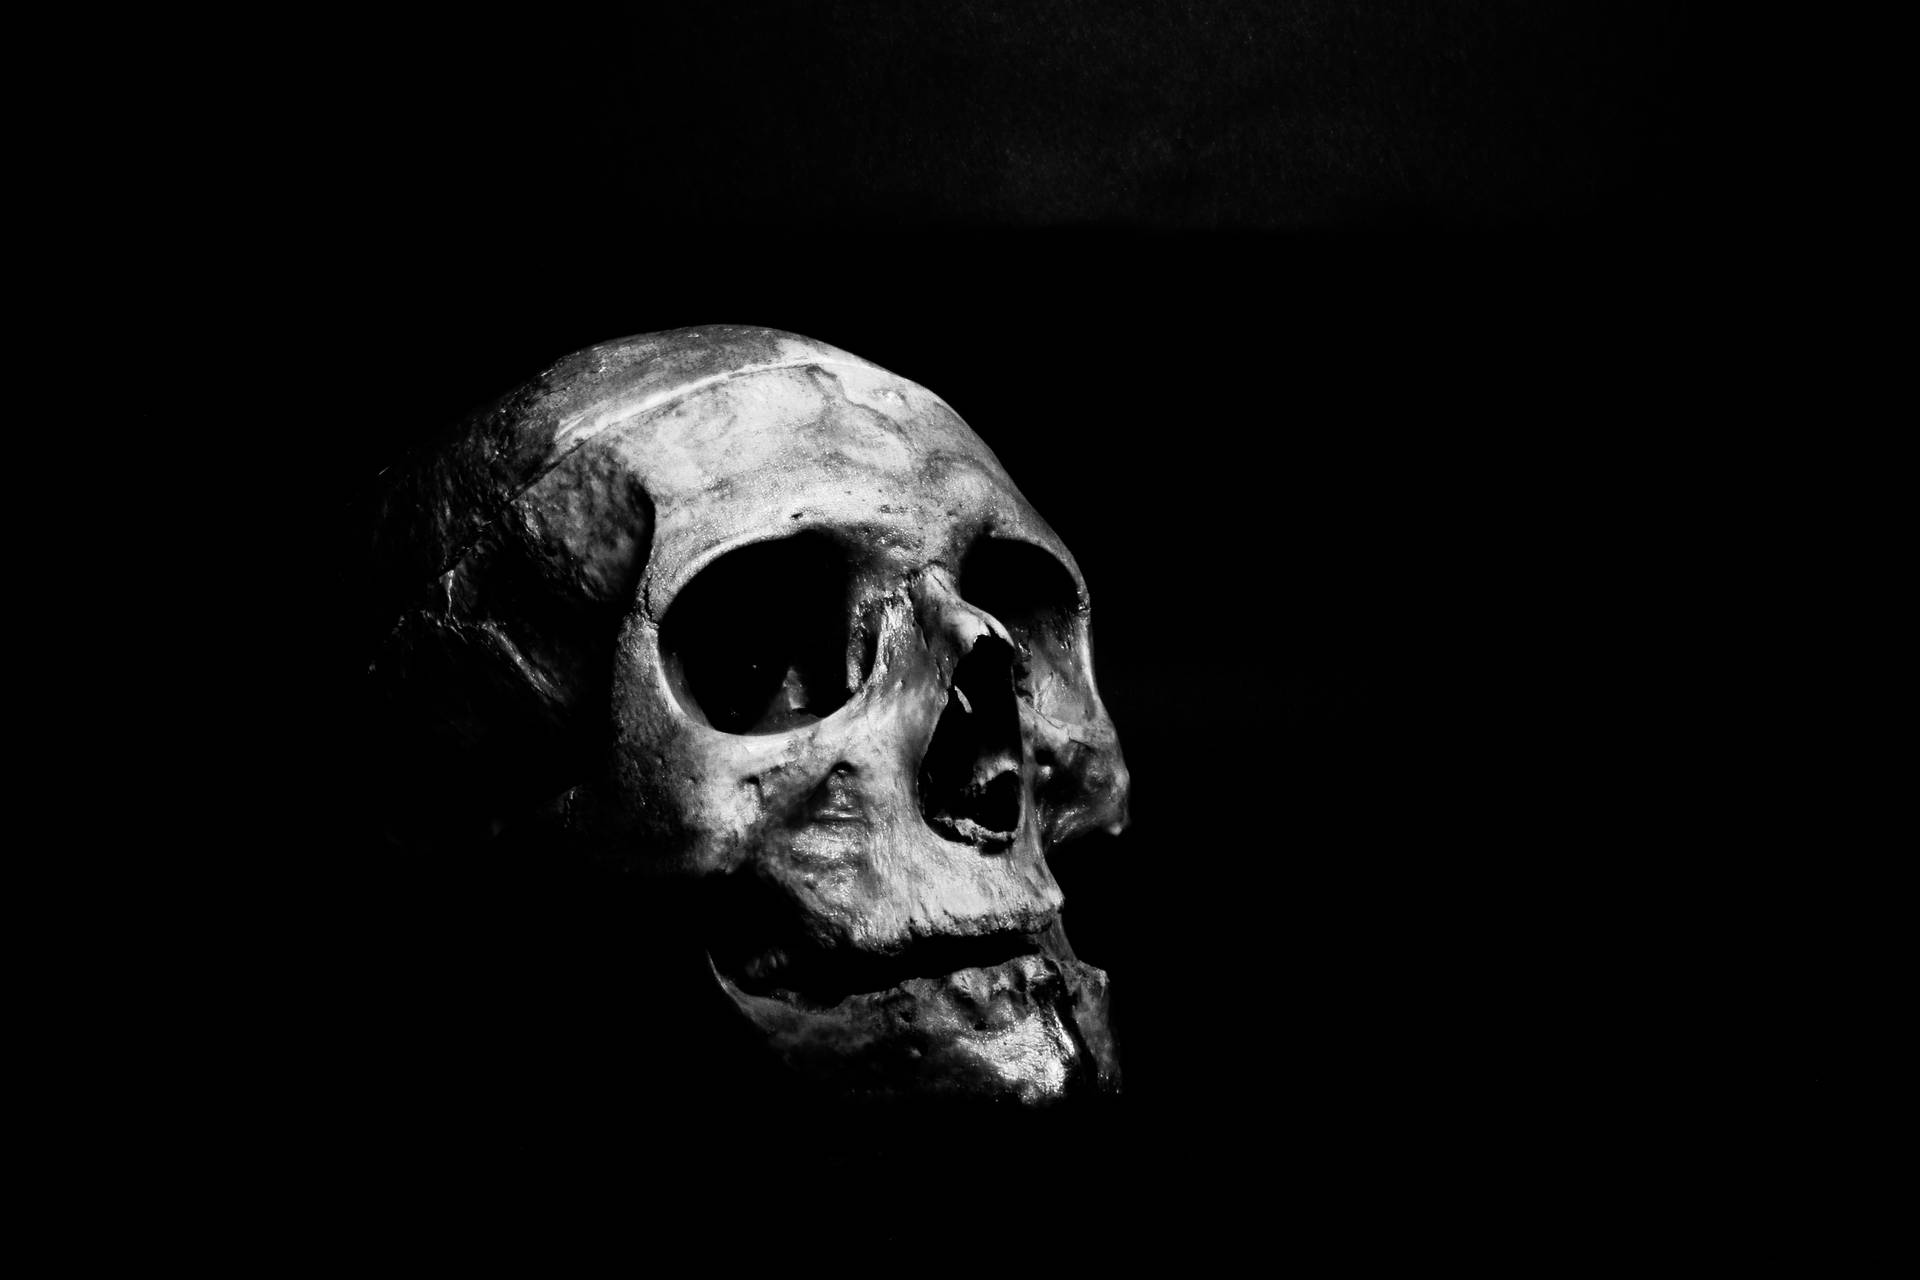 Embodying Melancholy: A Solemn Skull In Solitude Background